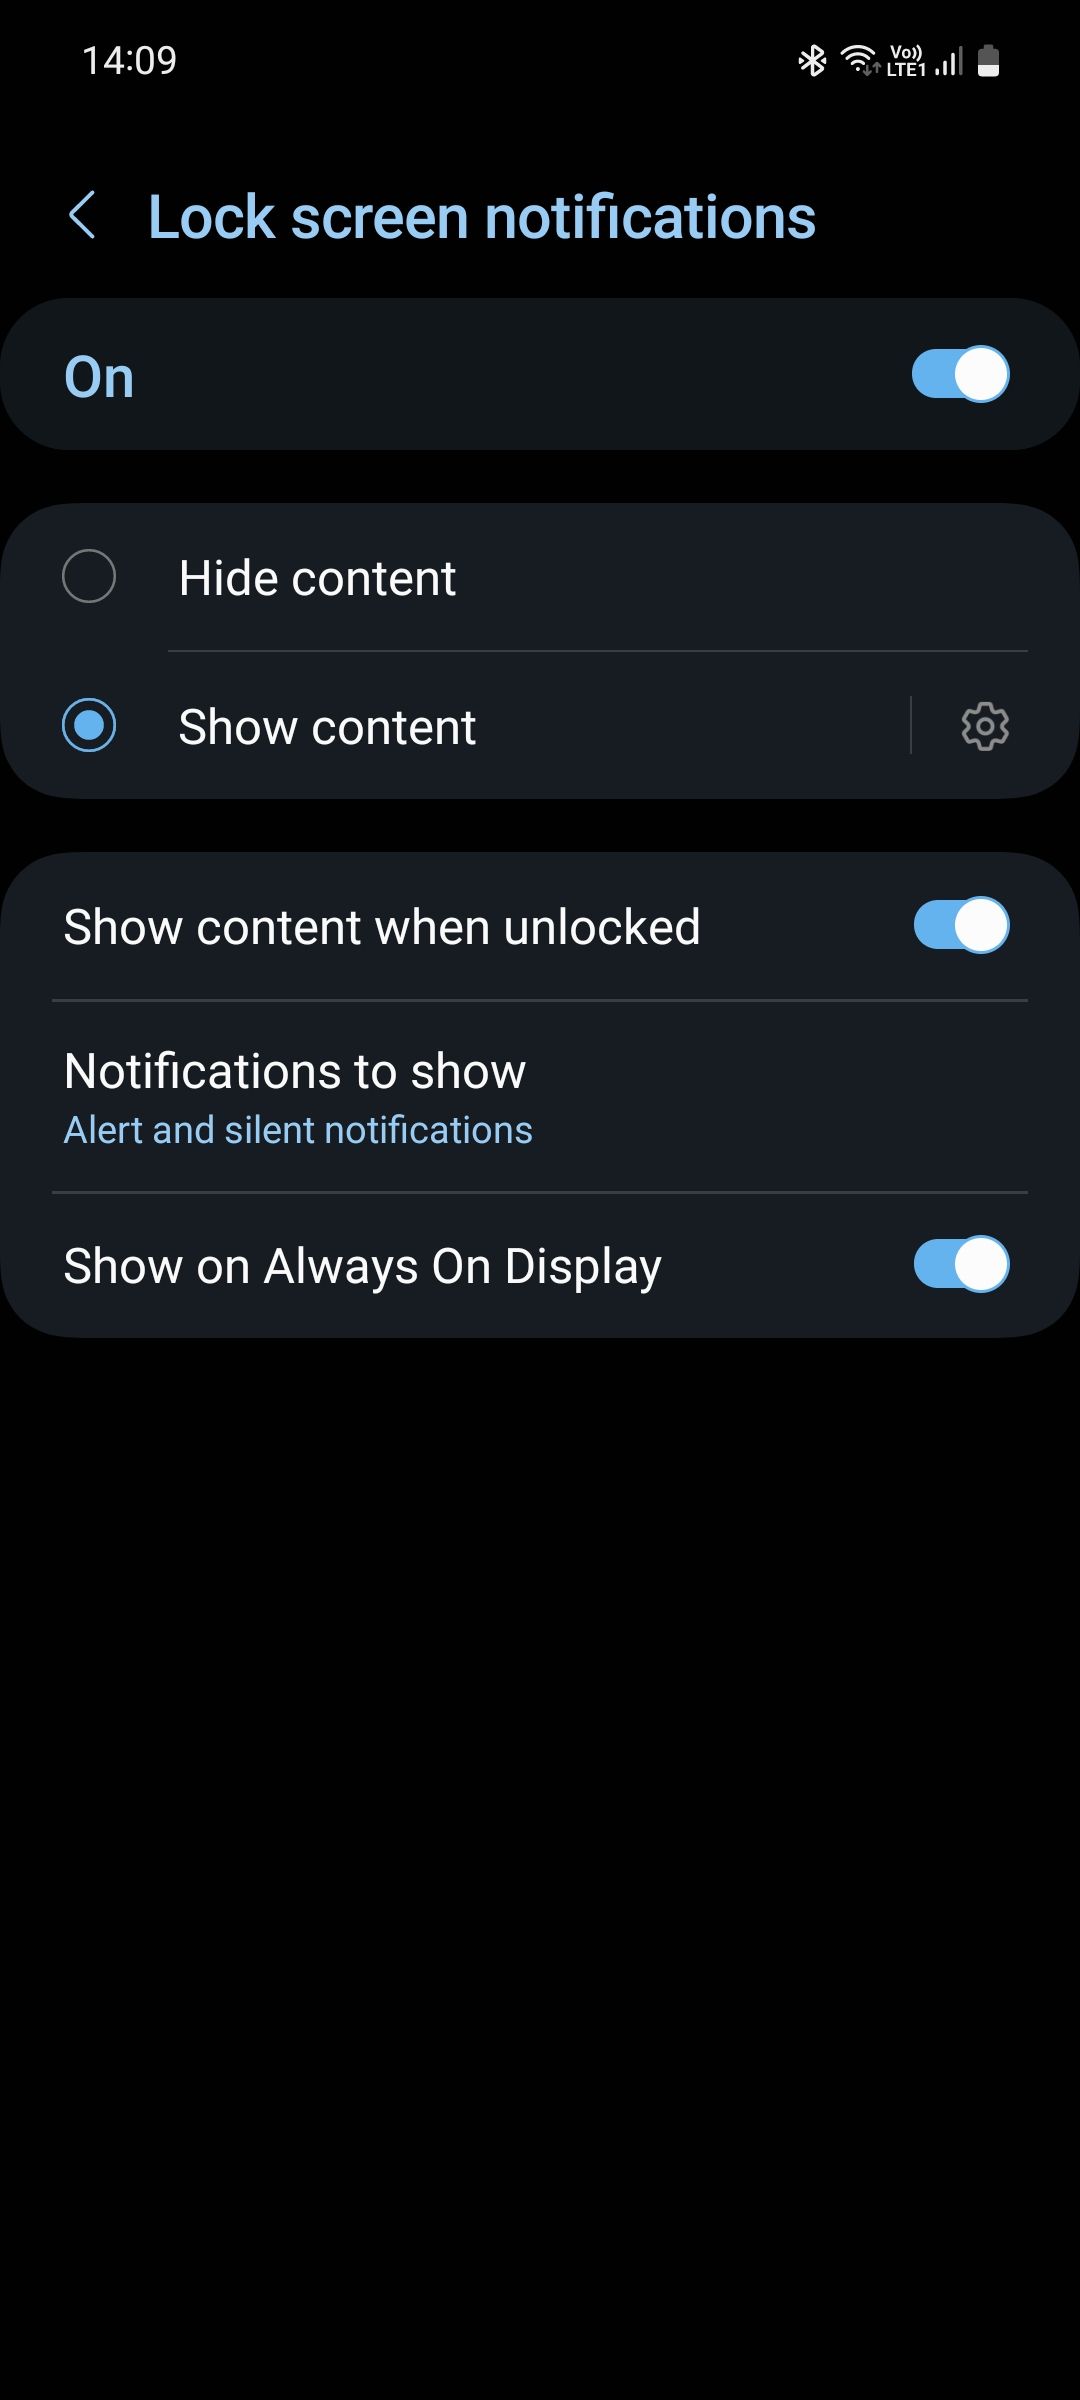 Samsung One UI Lock screen notifications menu